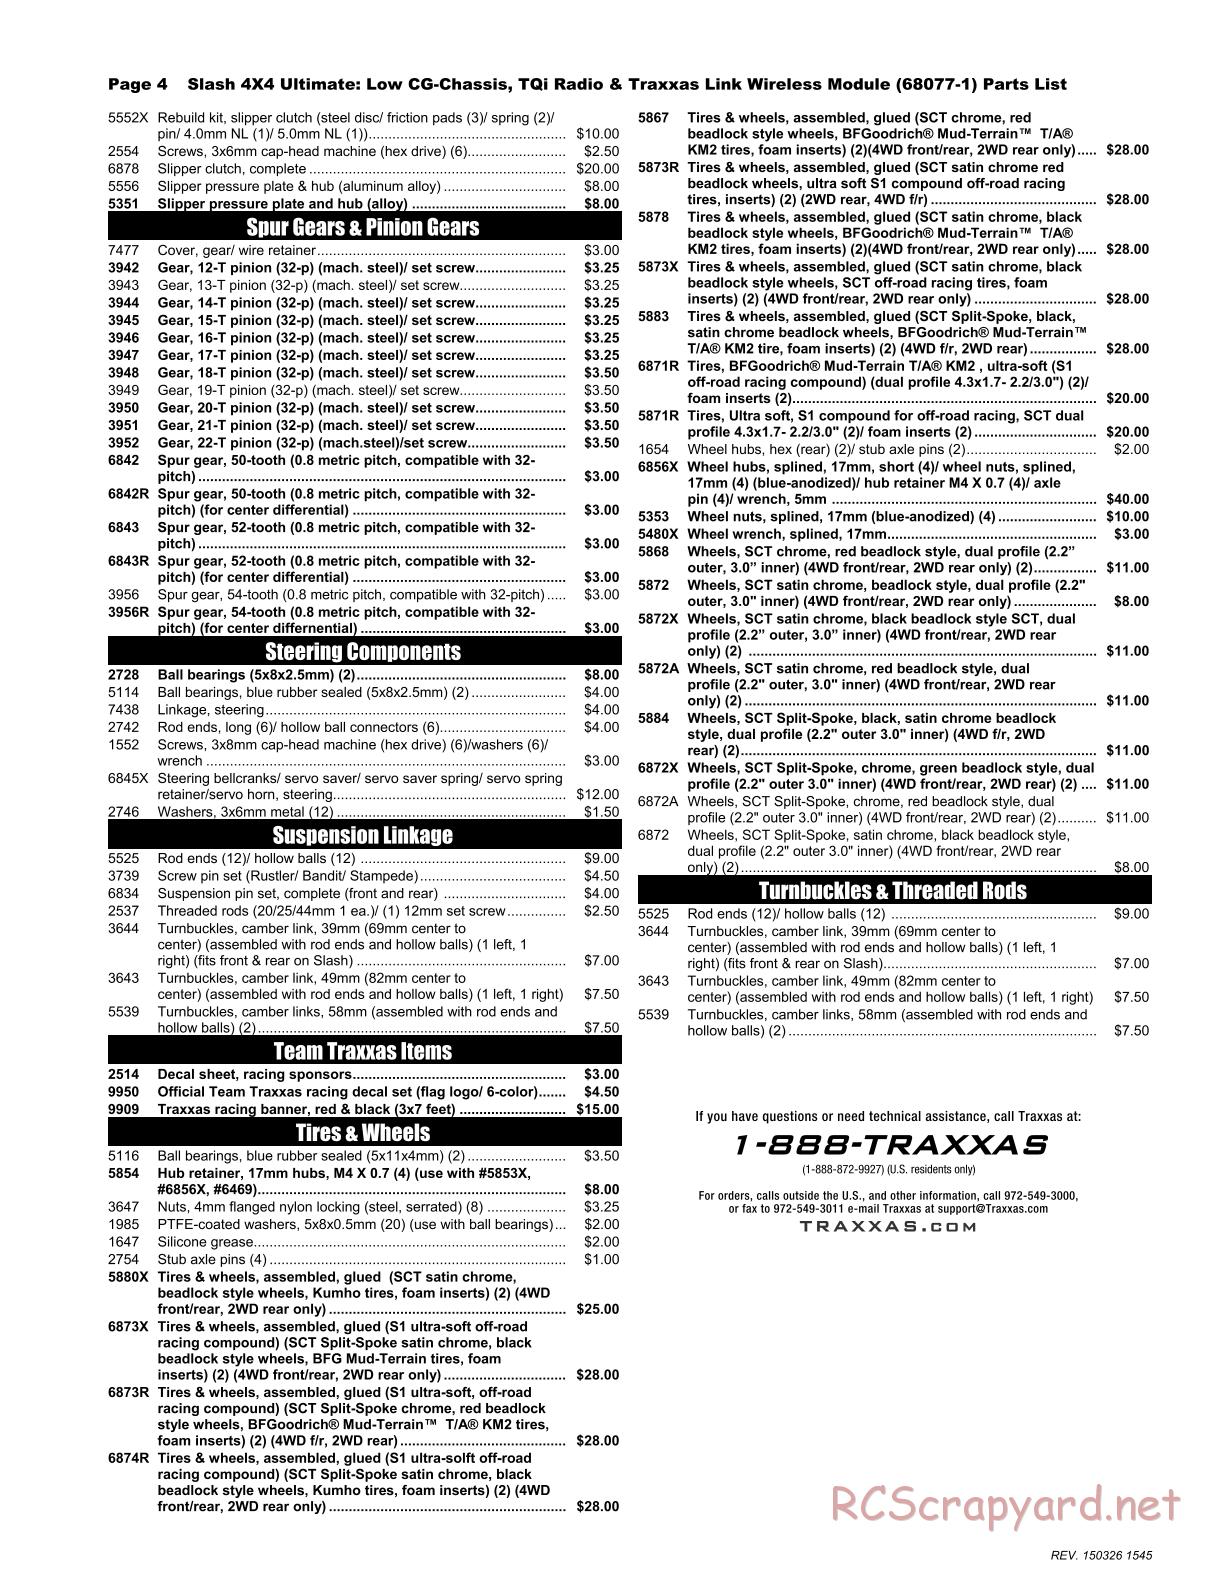 Traxxas - Slash 4x4 Ultimate (2015) - Parts List - Page 4